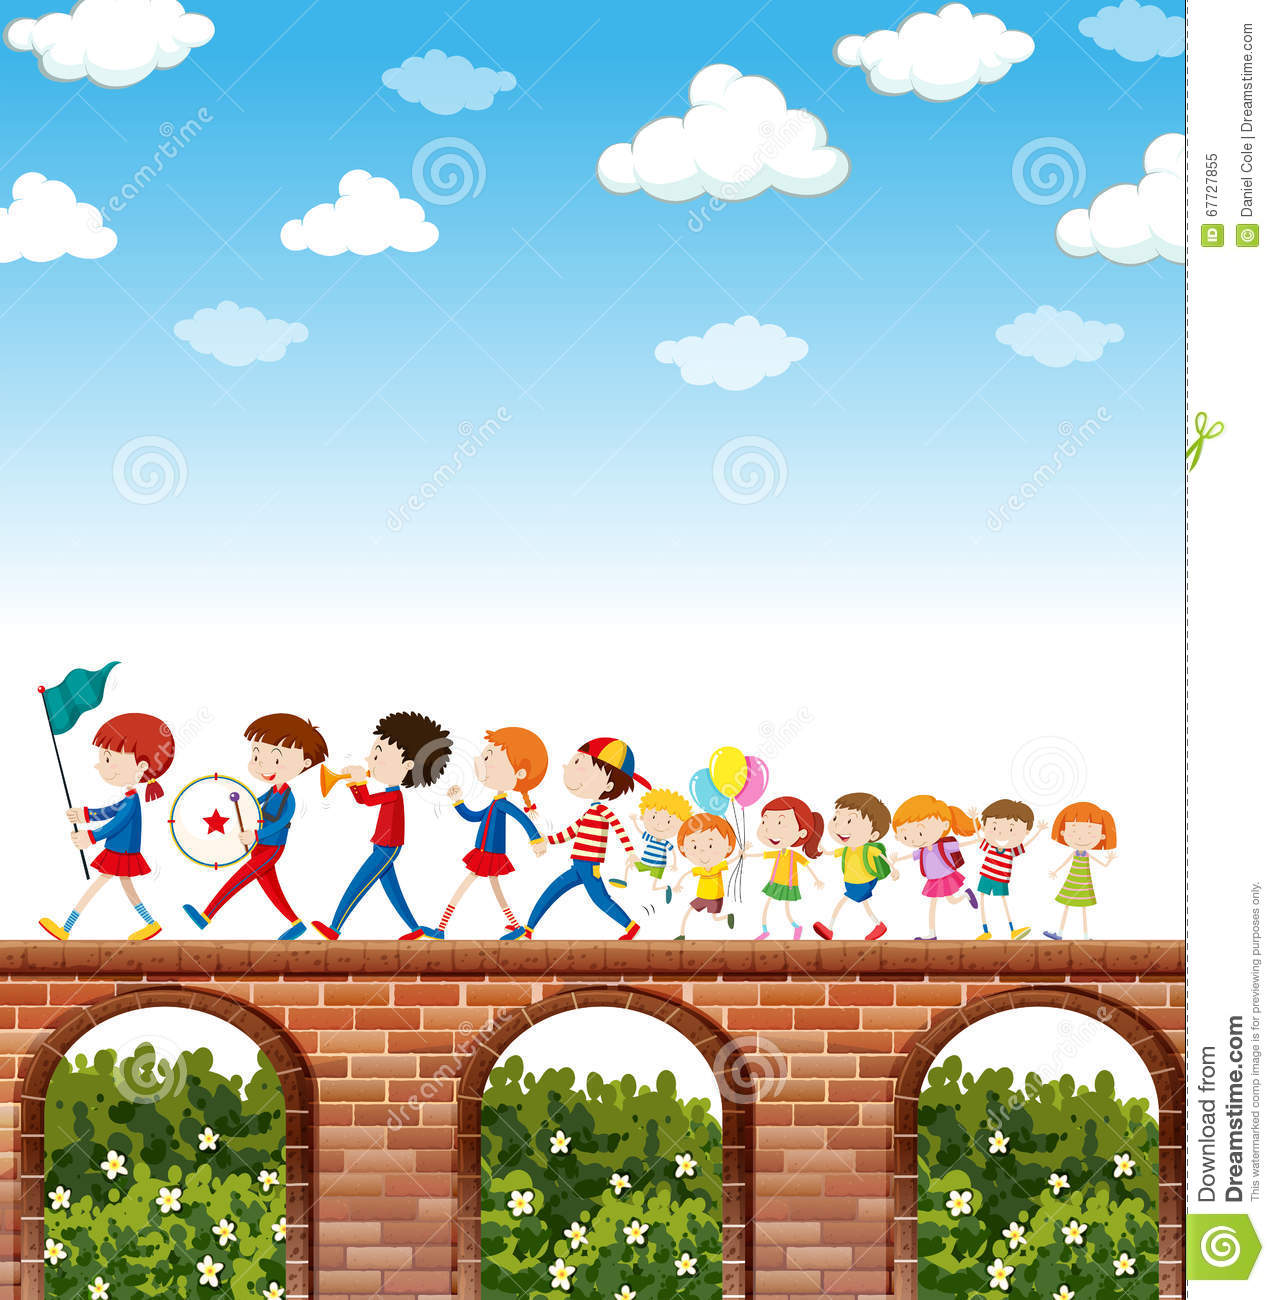 Children Marching On The Bridge Stock Vector.